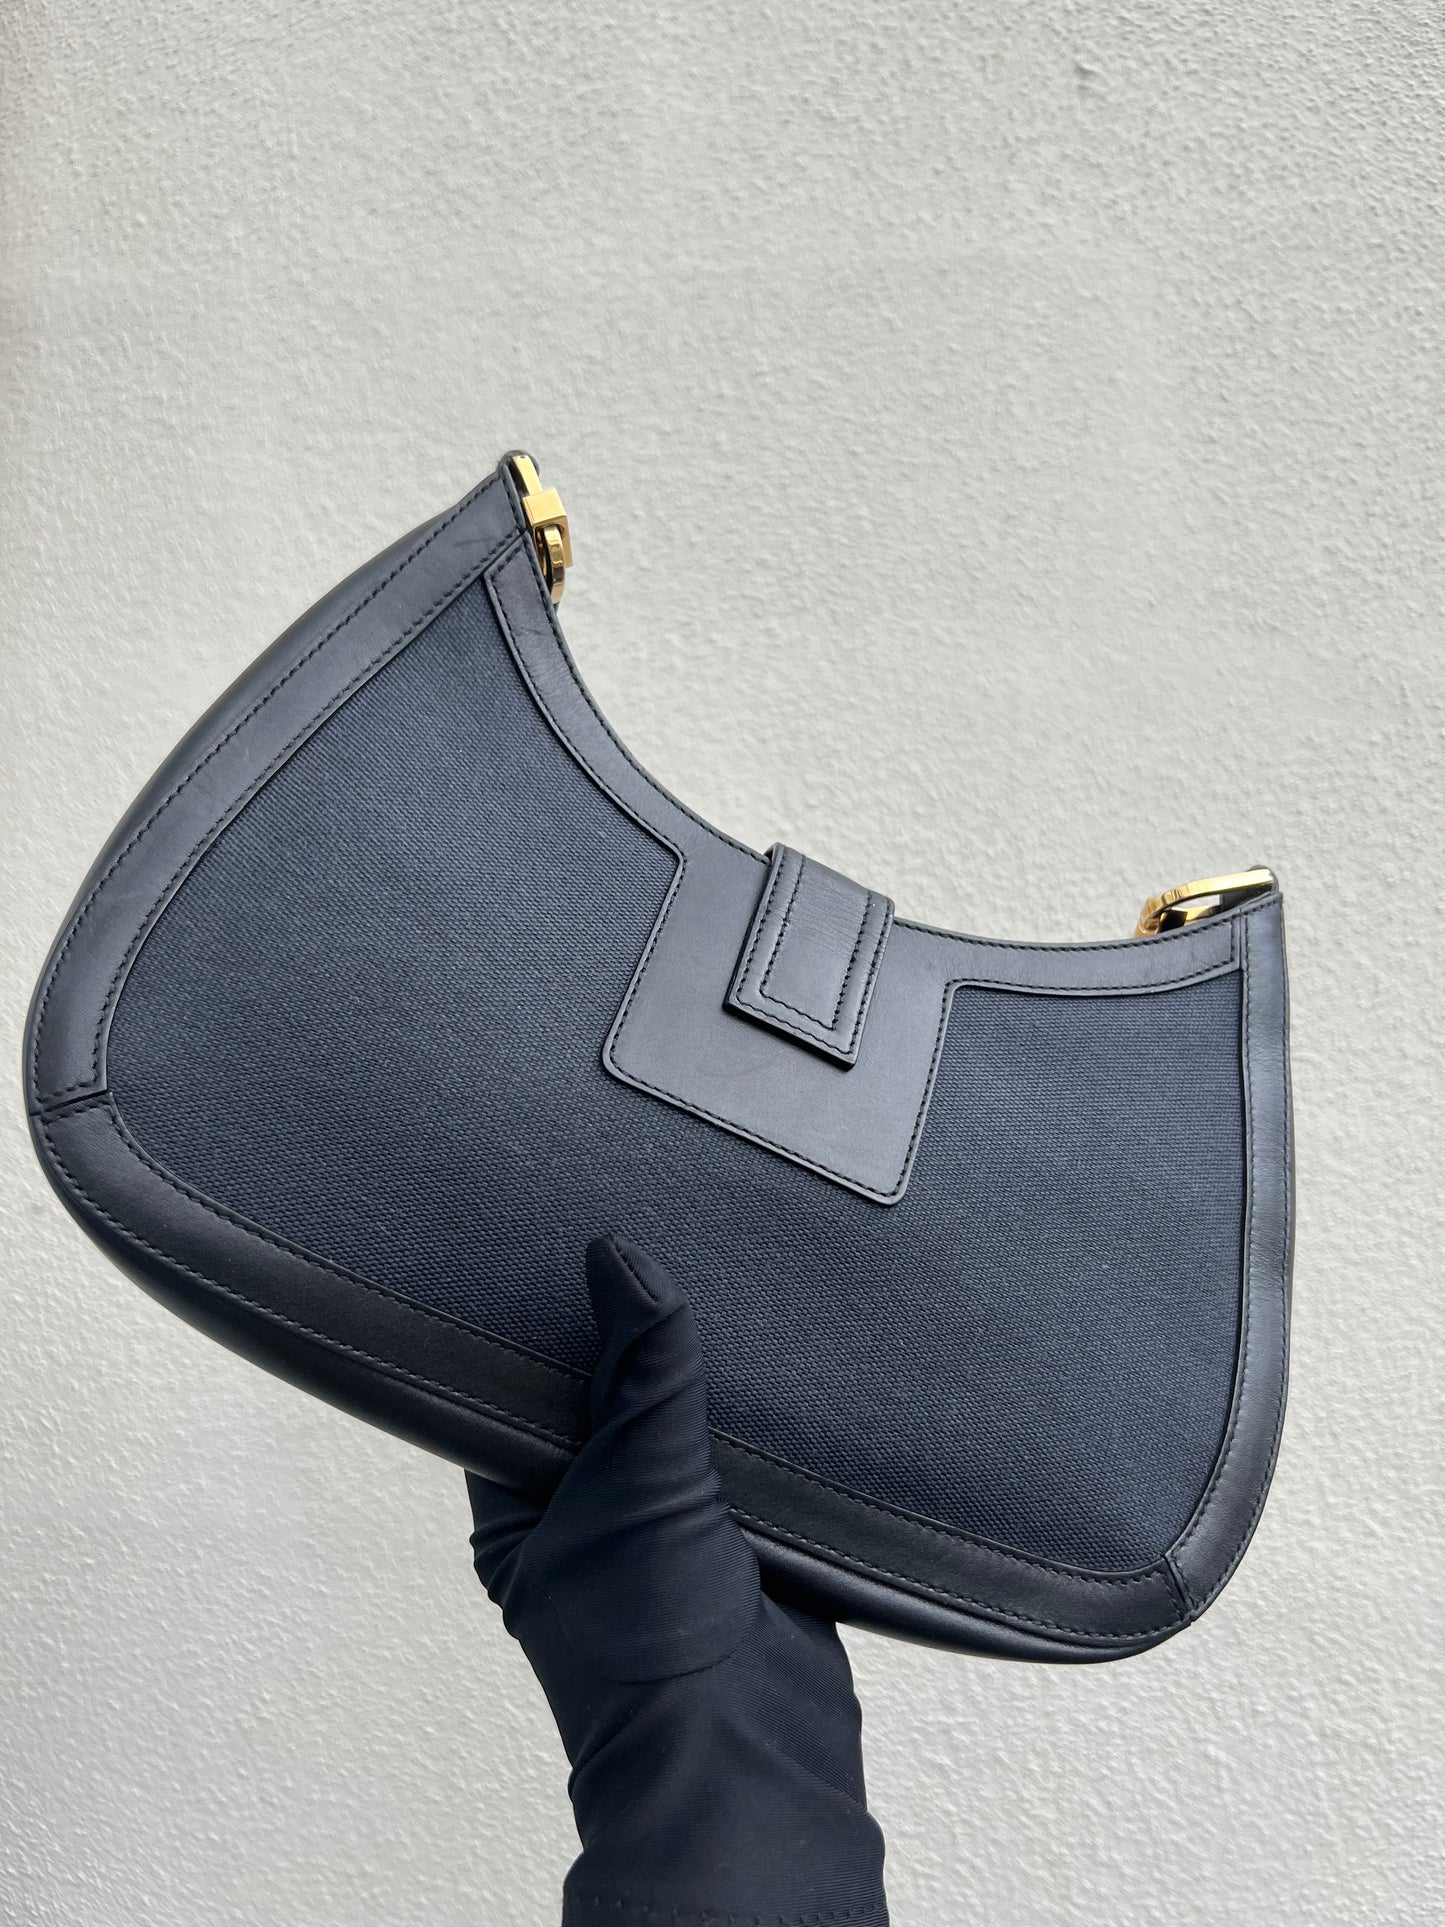 Pre-Loved Gucci 
Square G Shoulder bag with Gold hardware